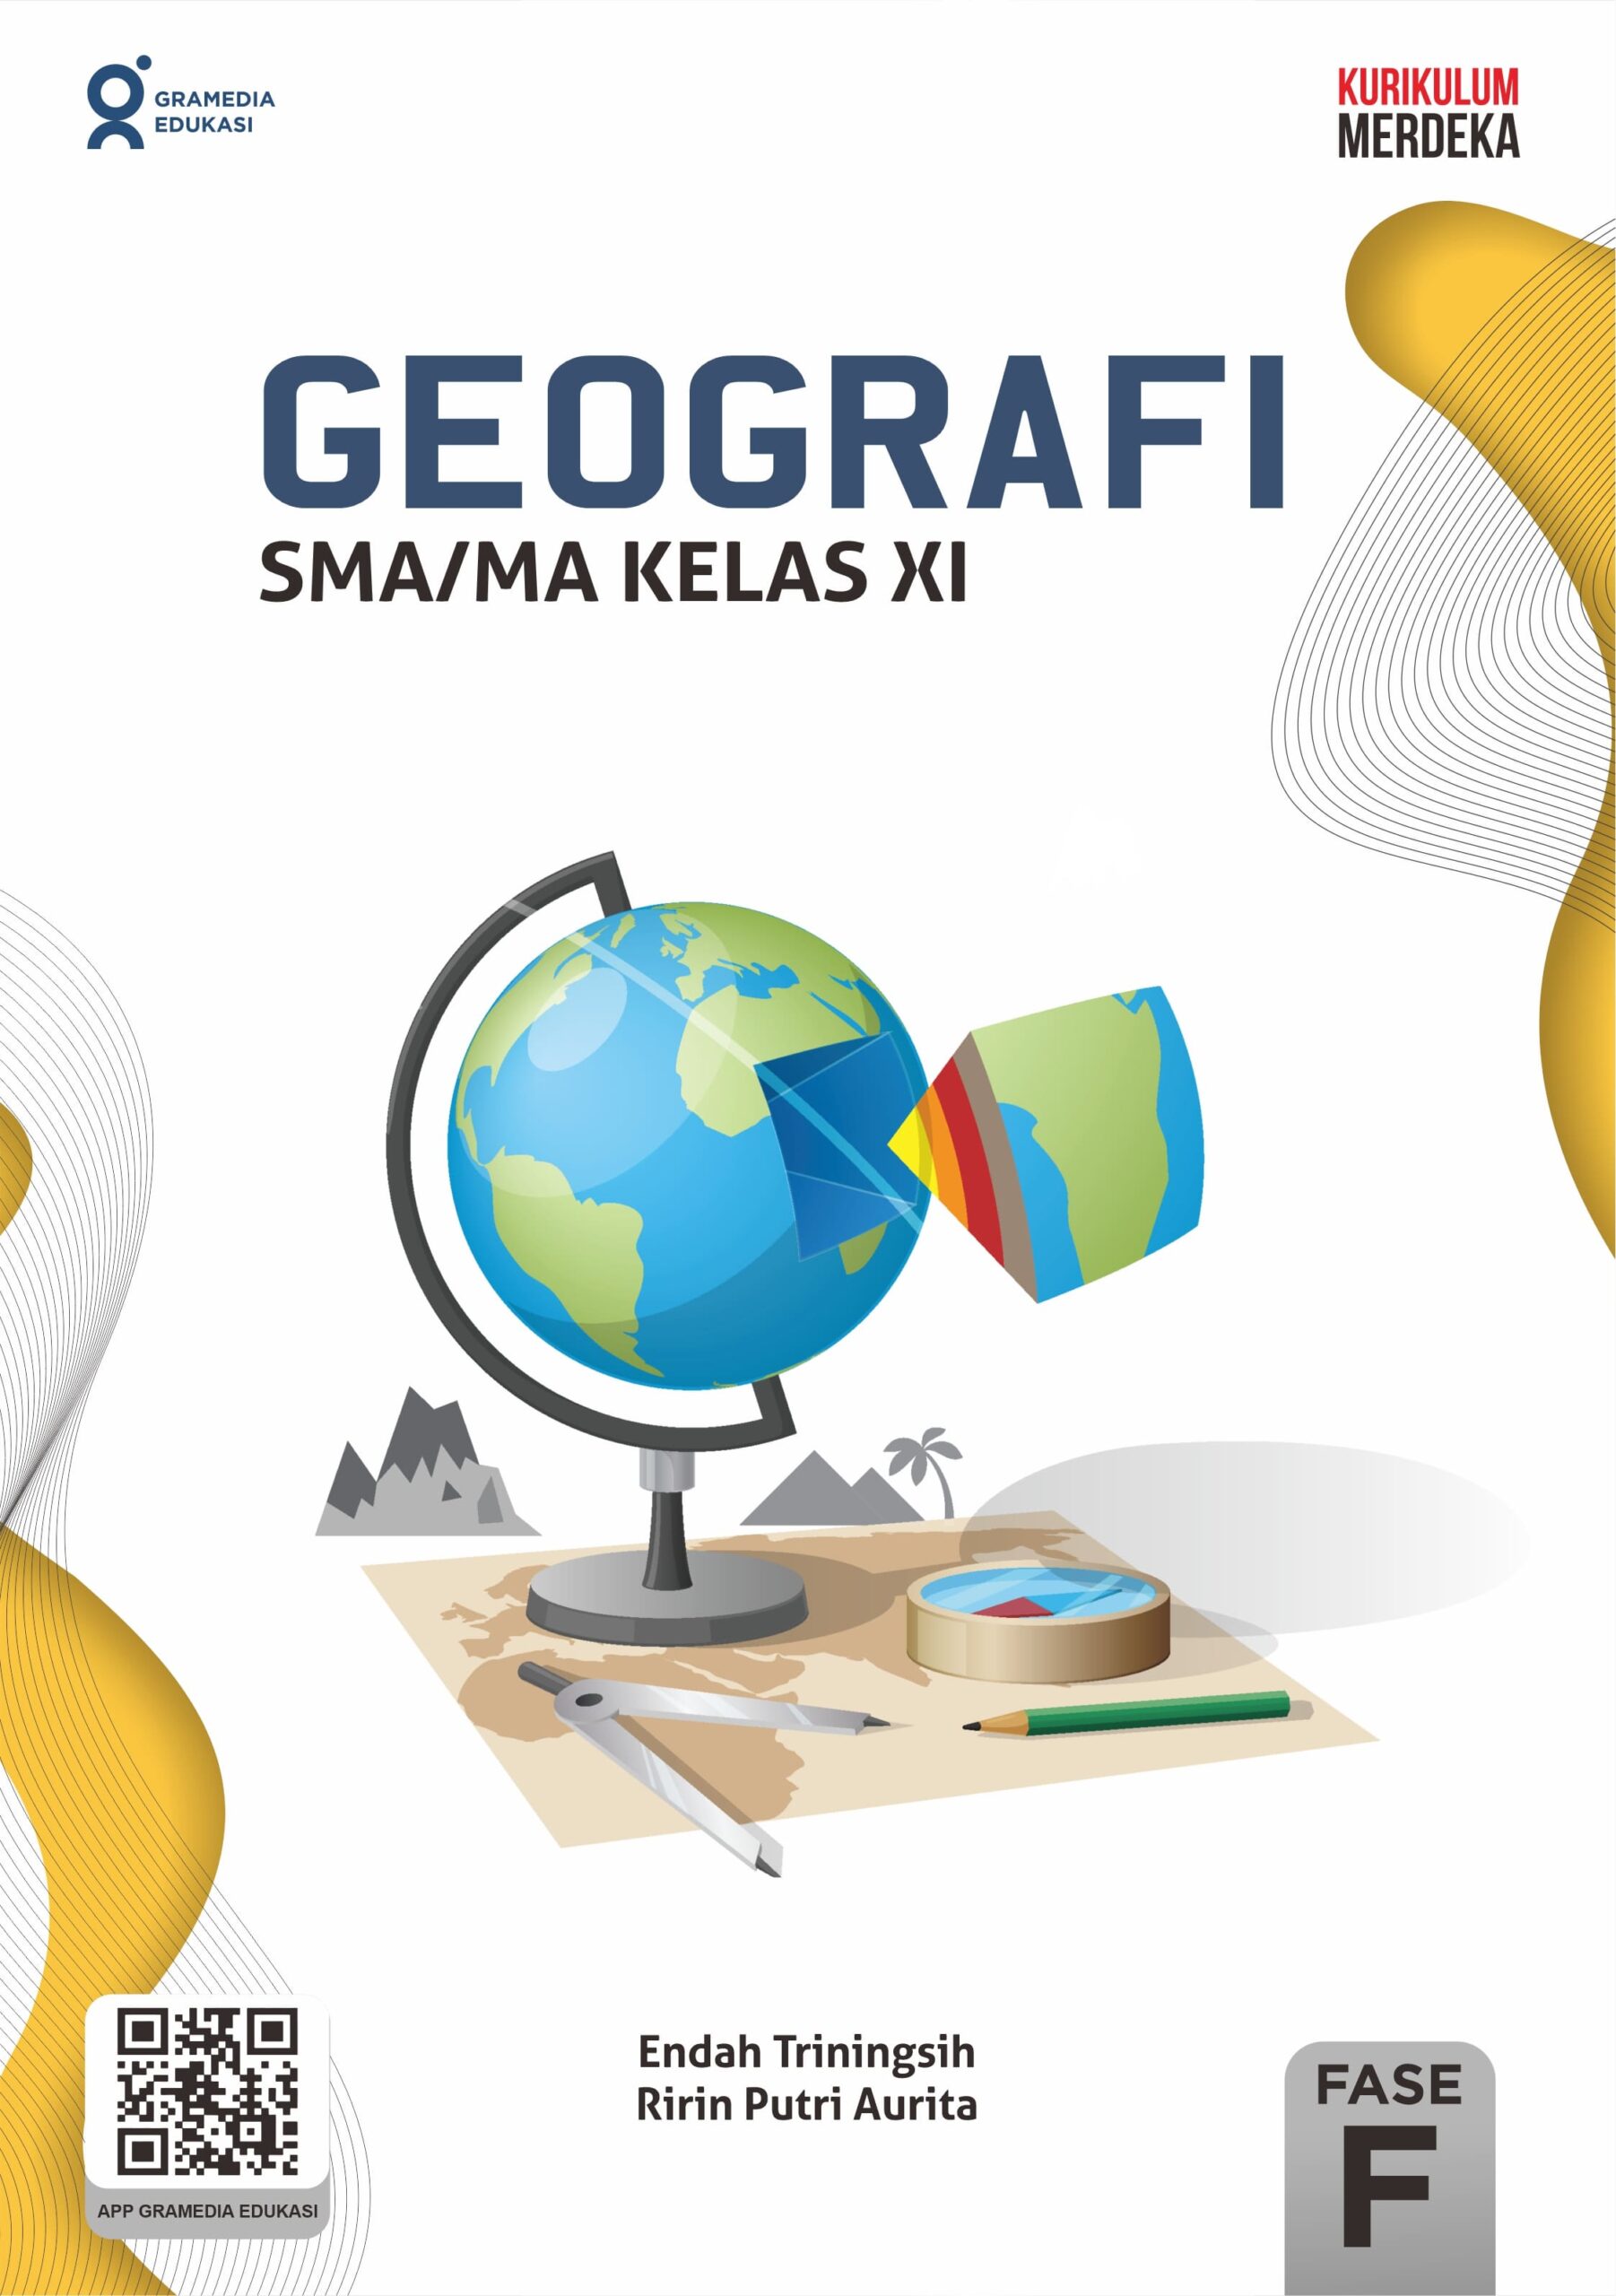 Geografi SMA/MA kelas XI